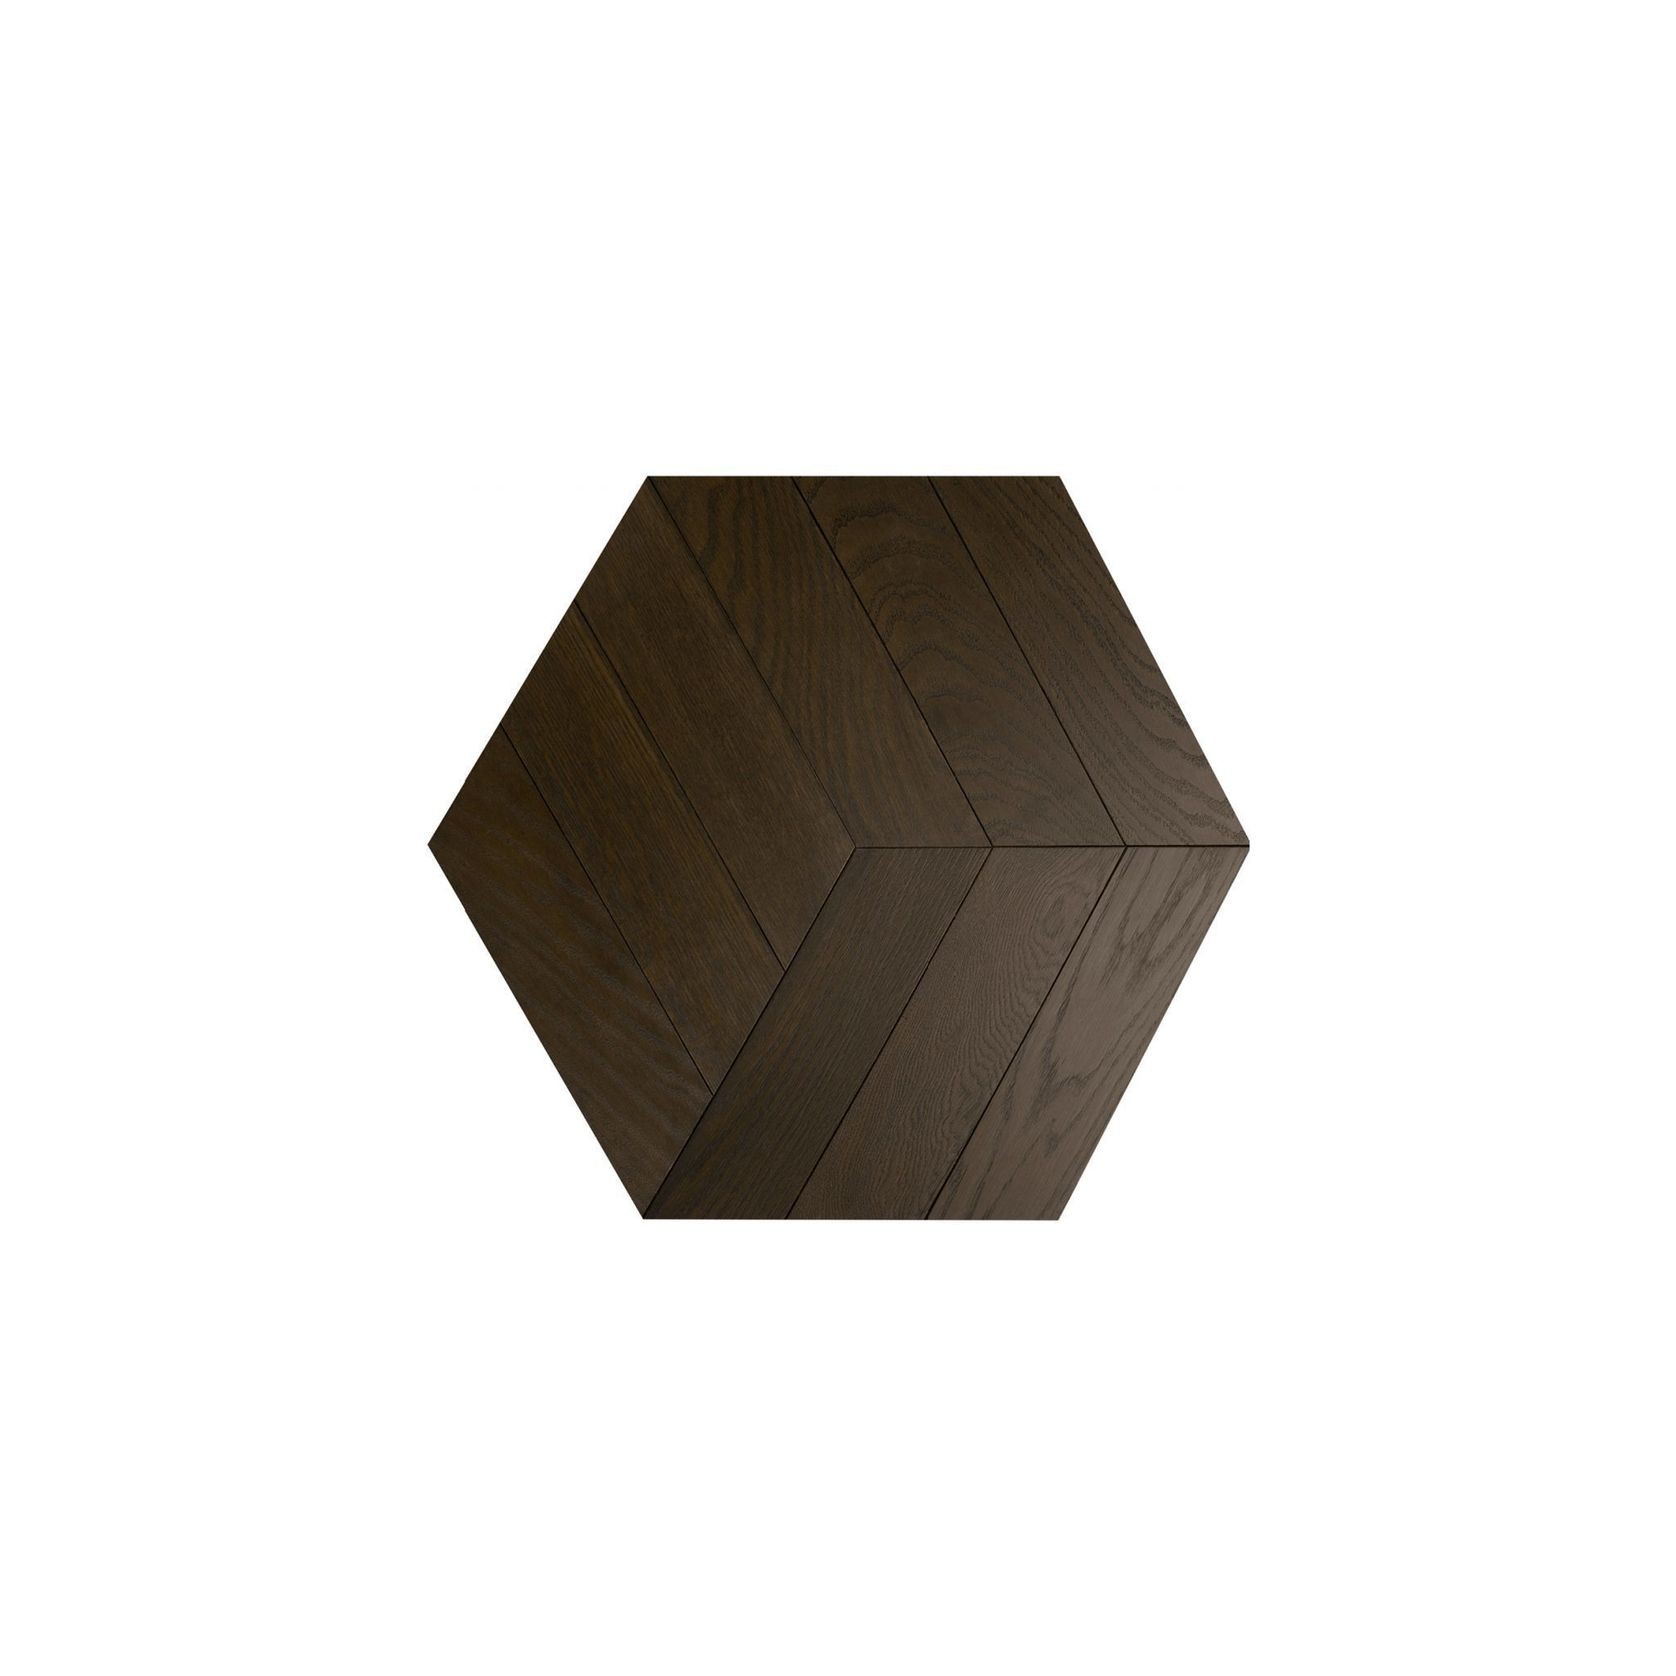 Herringbone by IPF - Timber & Parquet Flooring gallery detail image